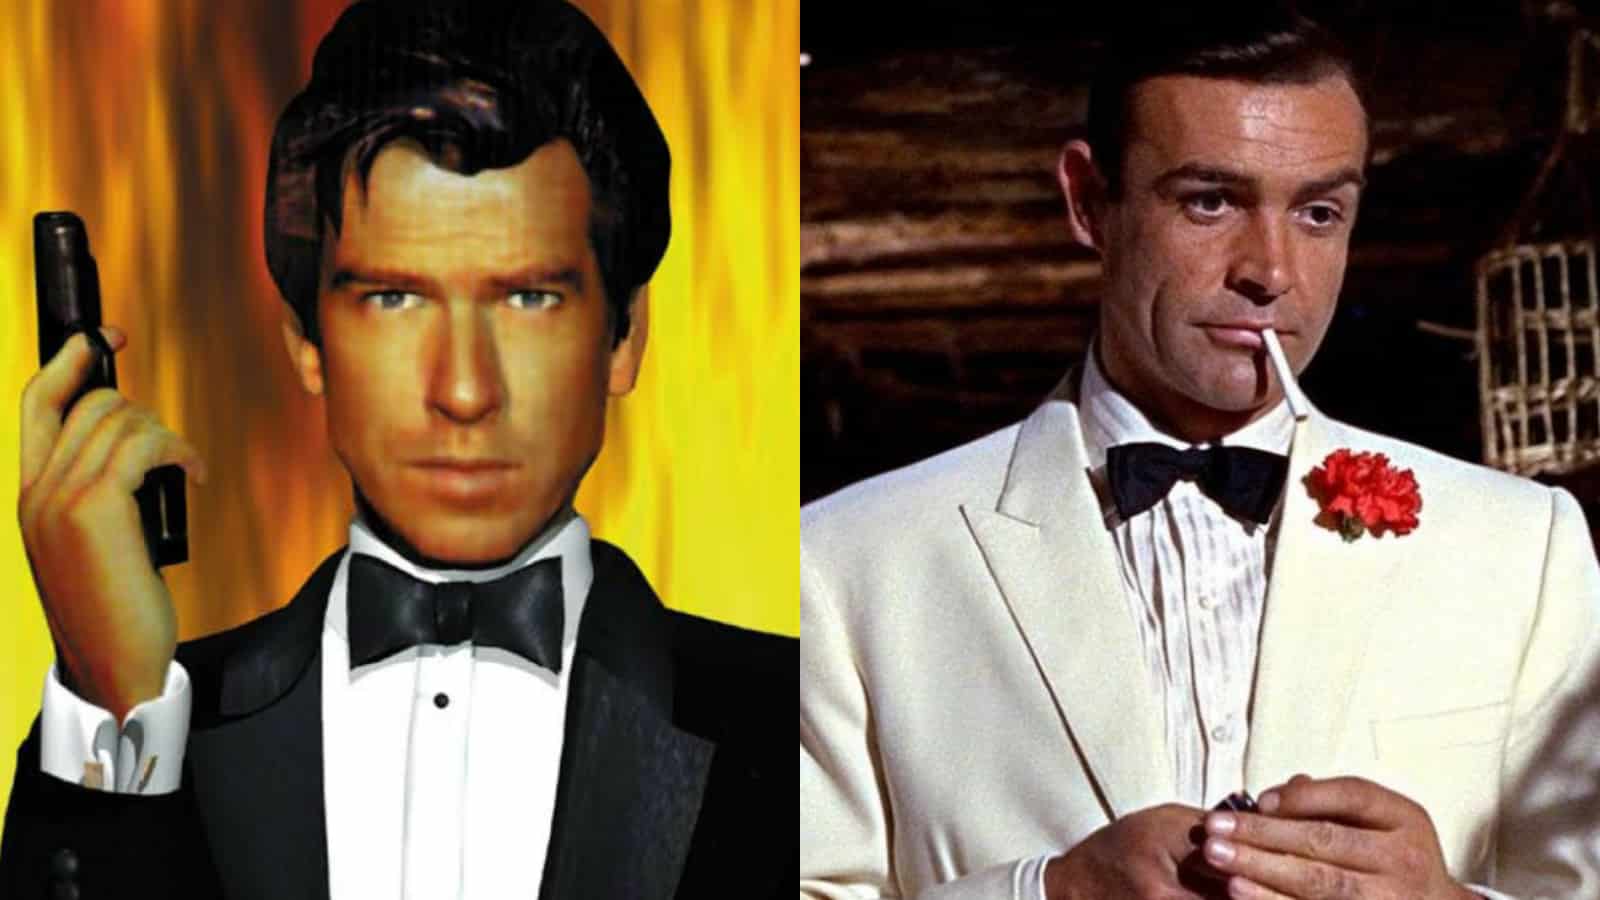 Pierce Brosnan in GoldenEye N64 and Sean Connery as James Bond in his white tuxedo in Goldfinger.